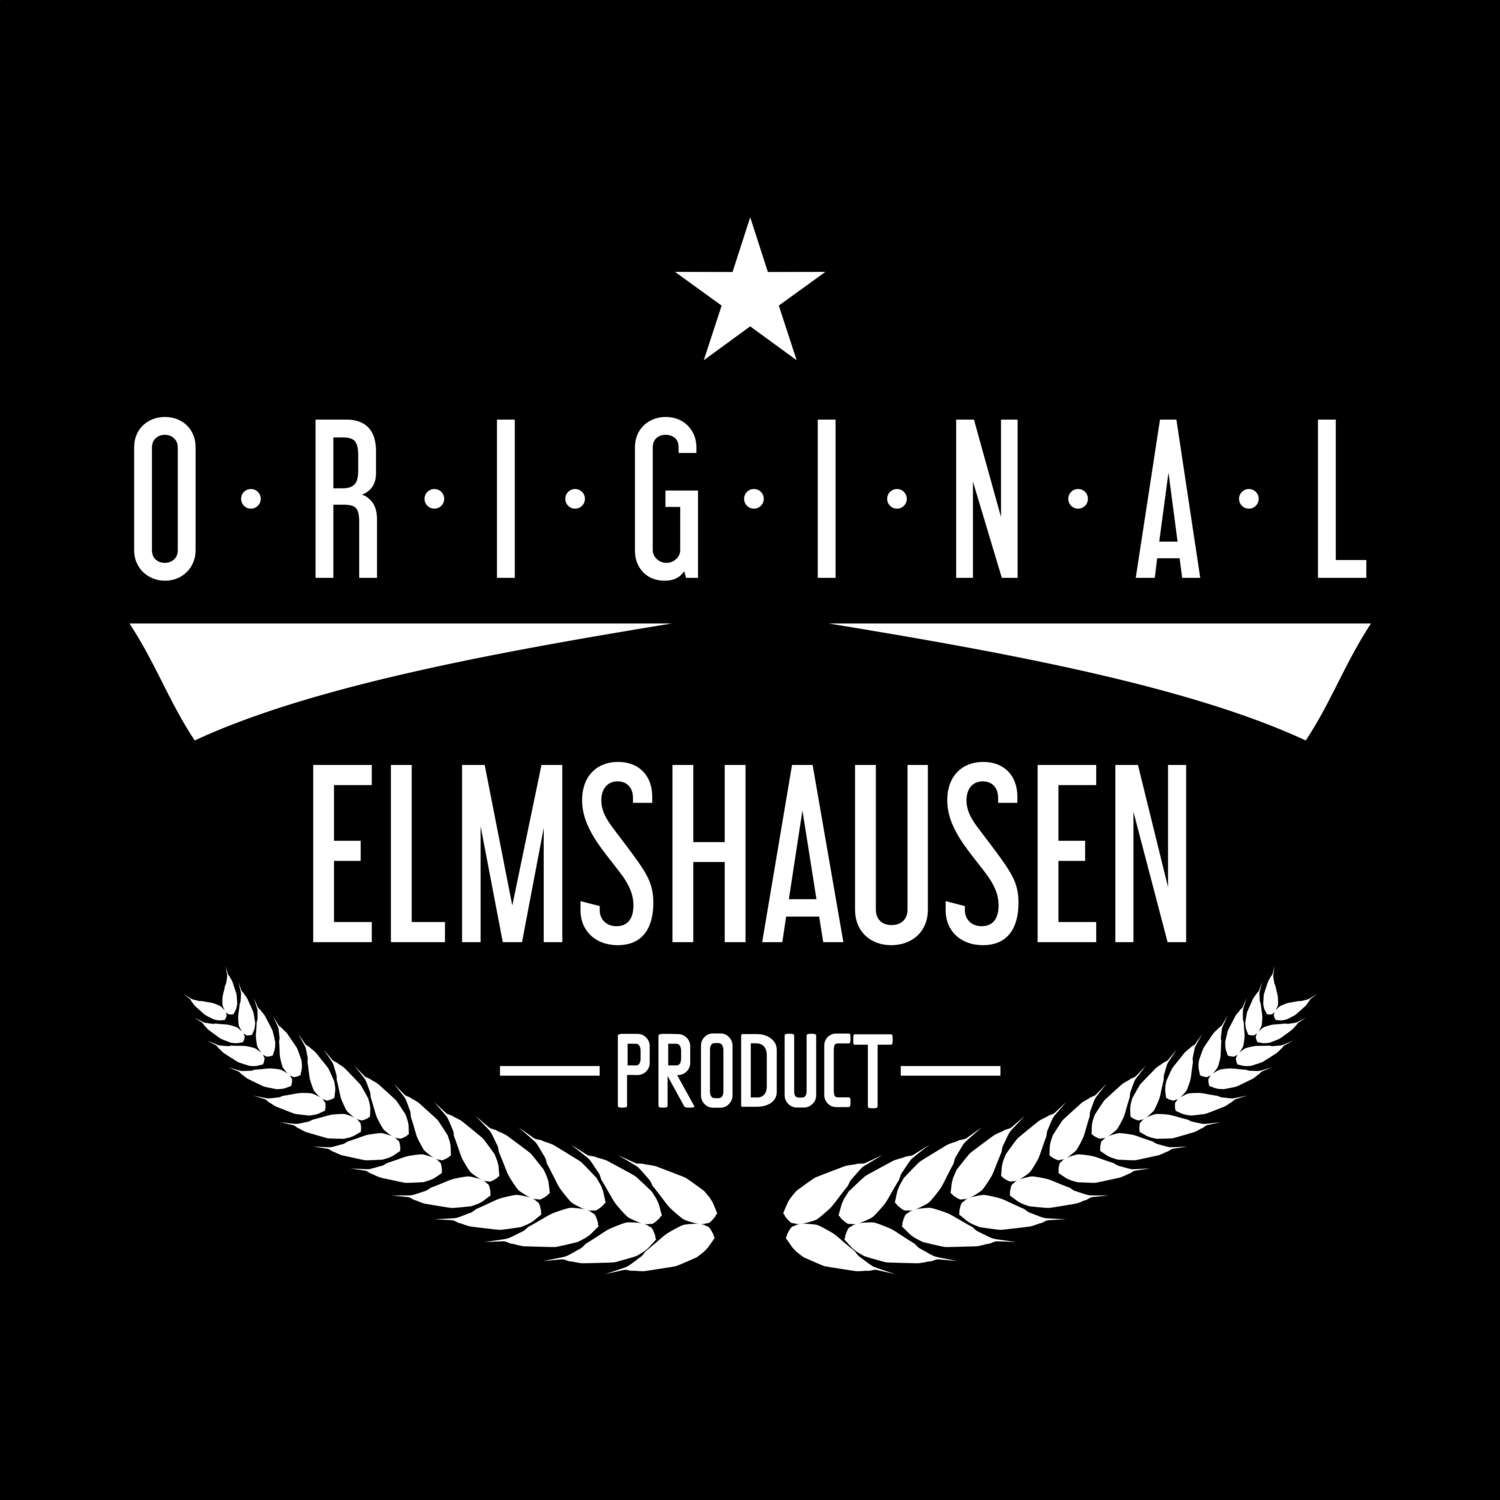 Elmshausen T-Shirt »Original Product«